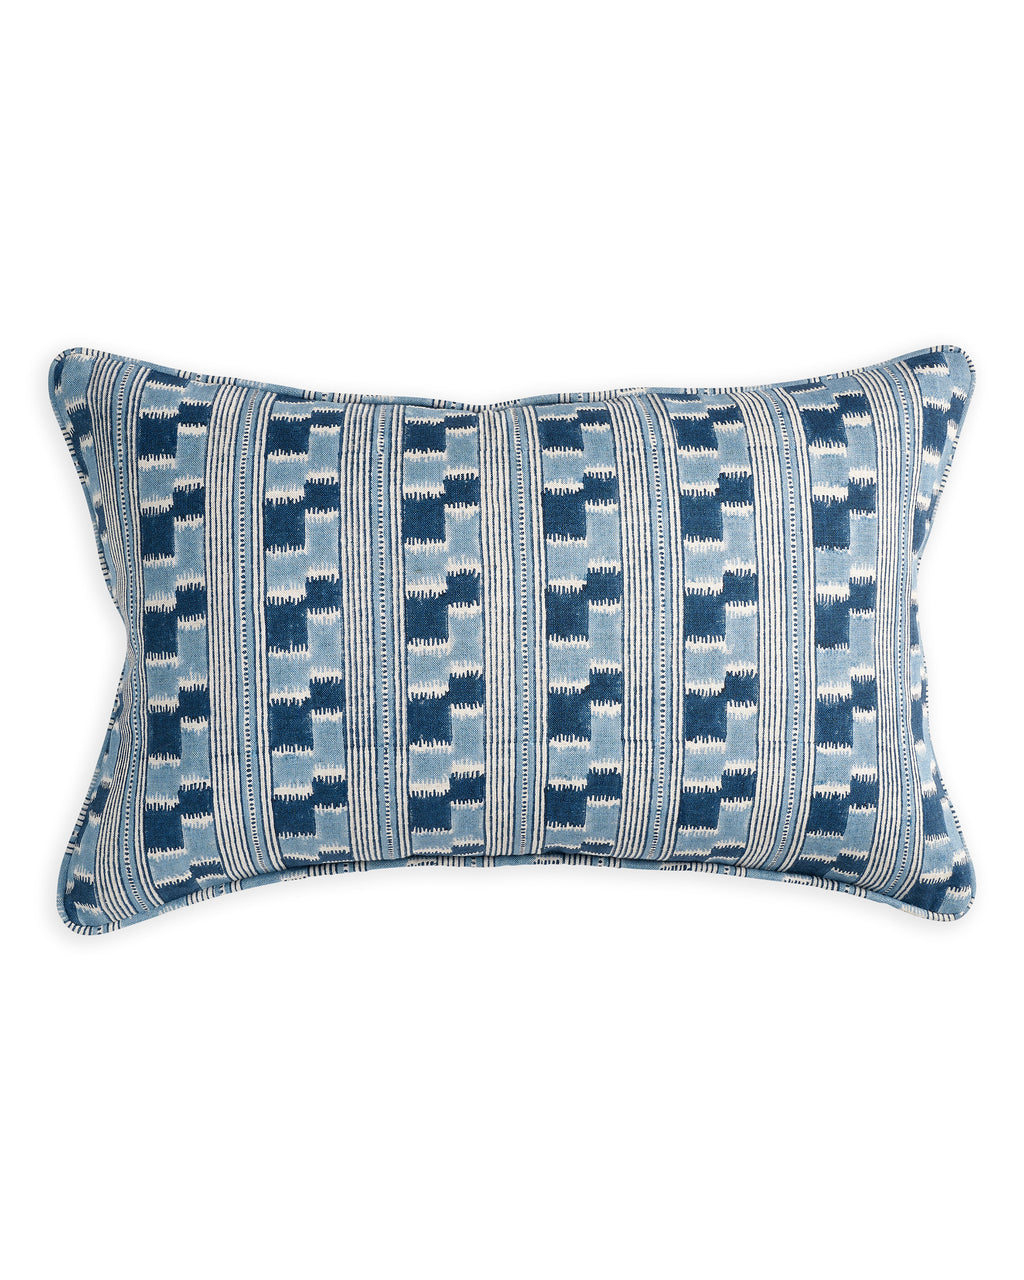 Chowk Azure linen cushion 35x55cm